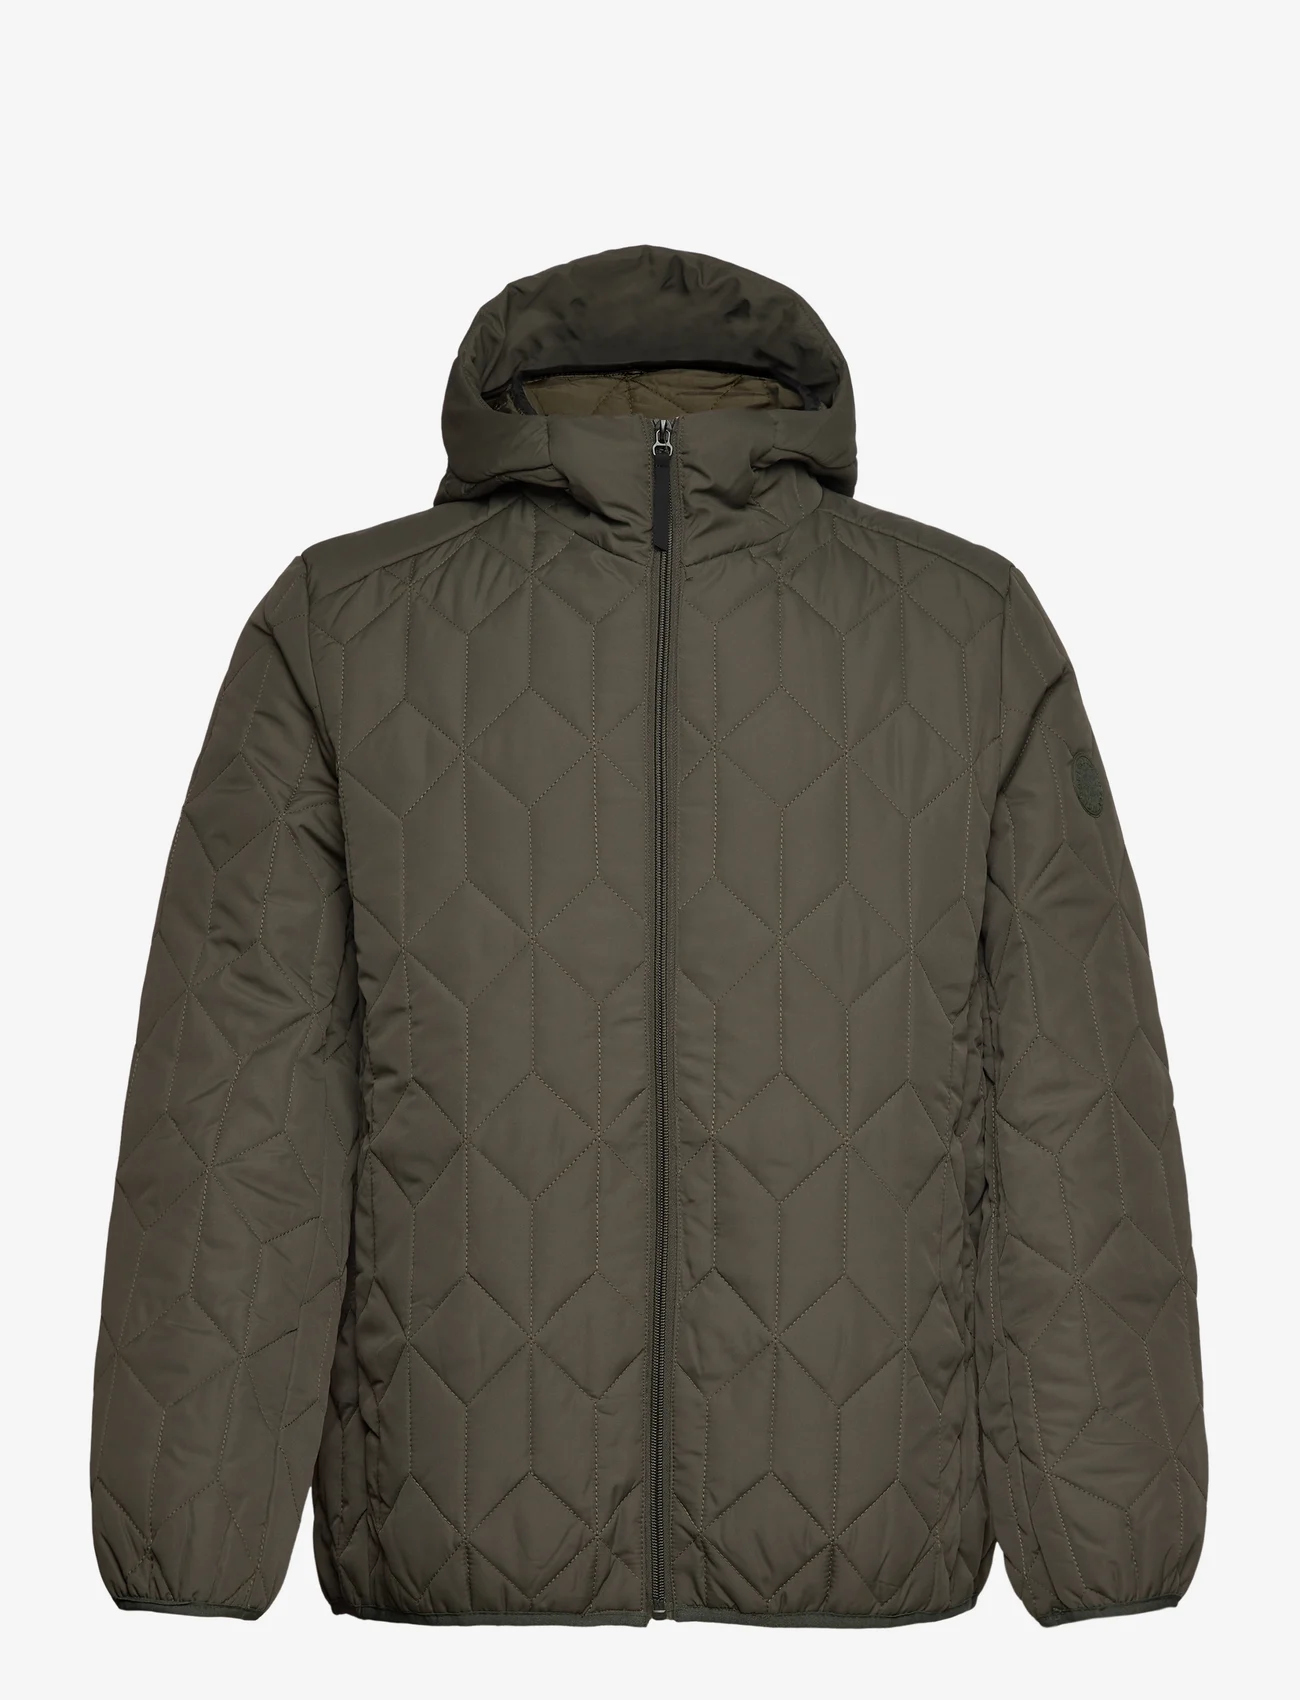 Lindbergh - Puffer jacket w?.hood - winterjacken - dk army - 0